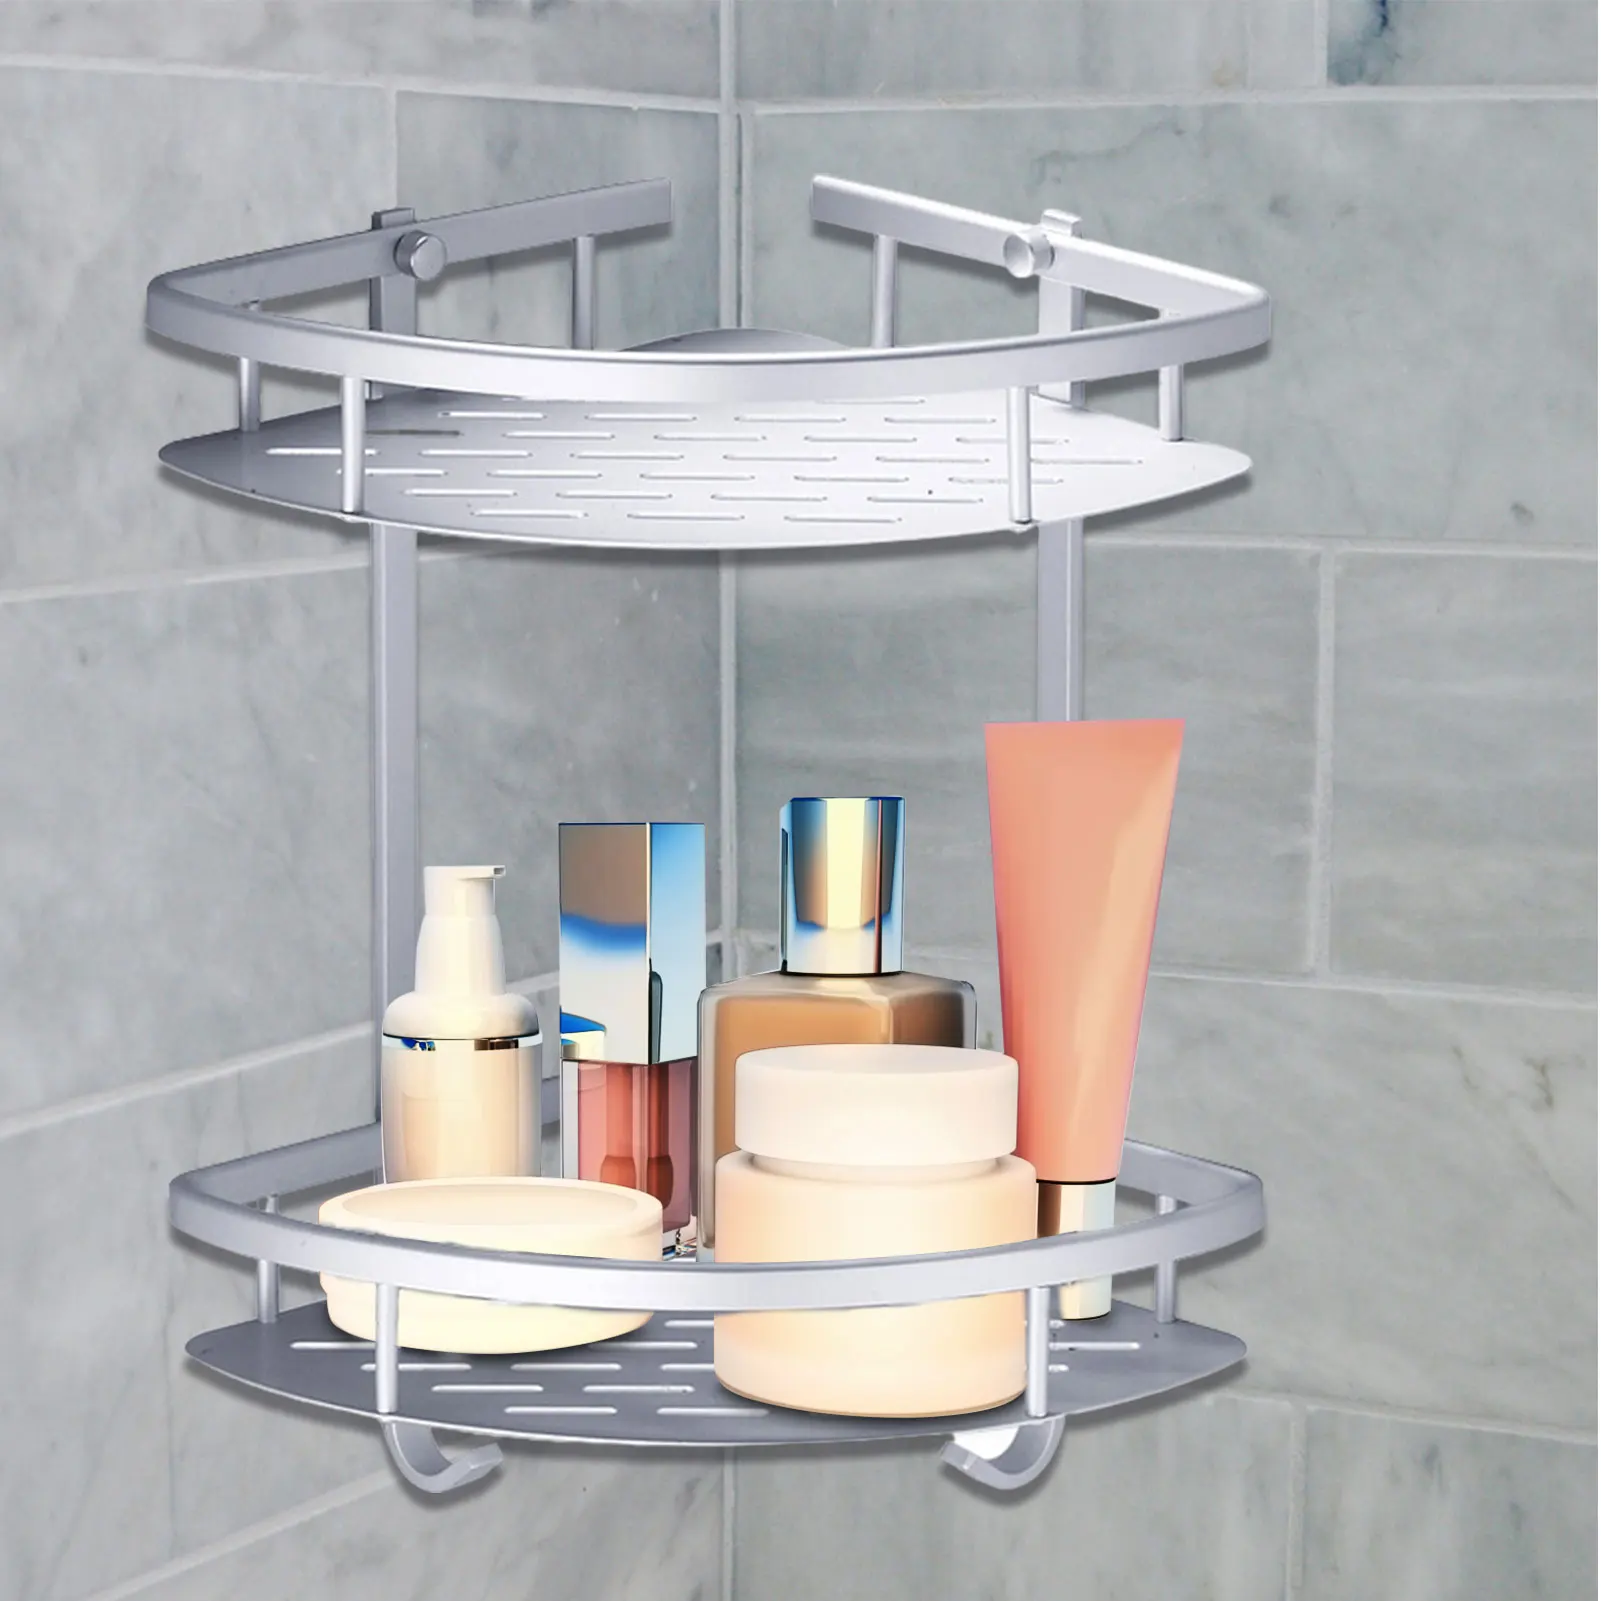 GERUIKE Shower Shelf Corner Shower Caddy Shower Basket Self Adhesive Bathroom Accessories Shelves No Drilling Space Aluminum 4 Hooks Rustproof 2 Tiers Triangle 